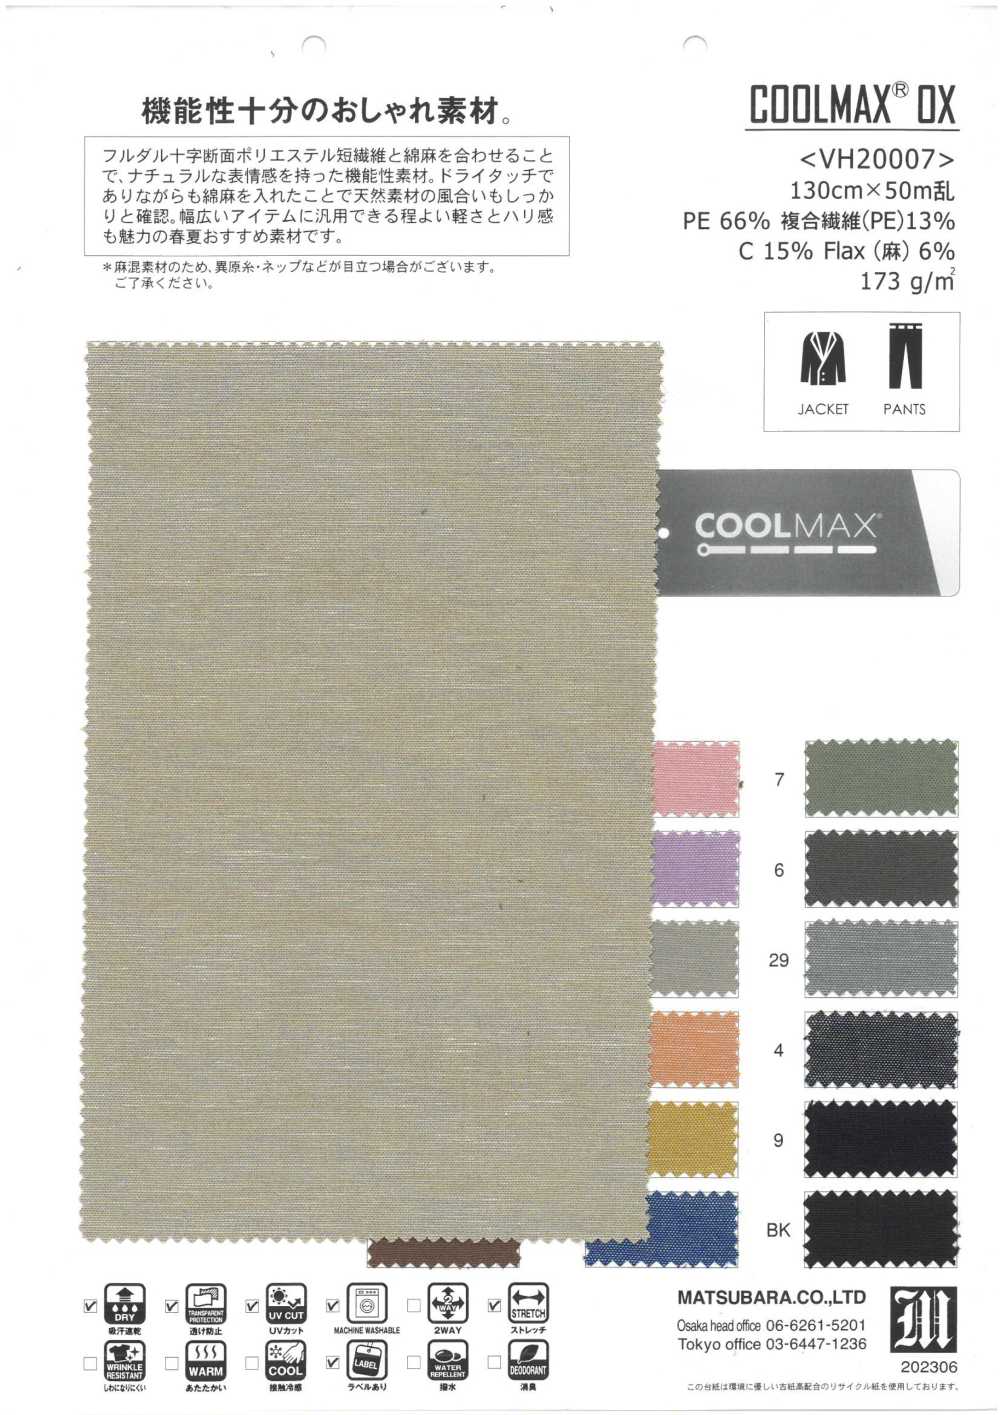 VH20007 COOLMAX® OX[Textile / Fabric] Matsubara